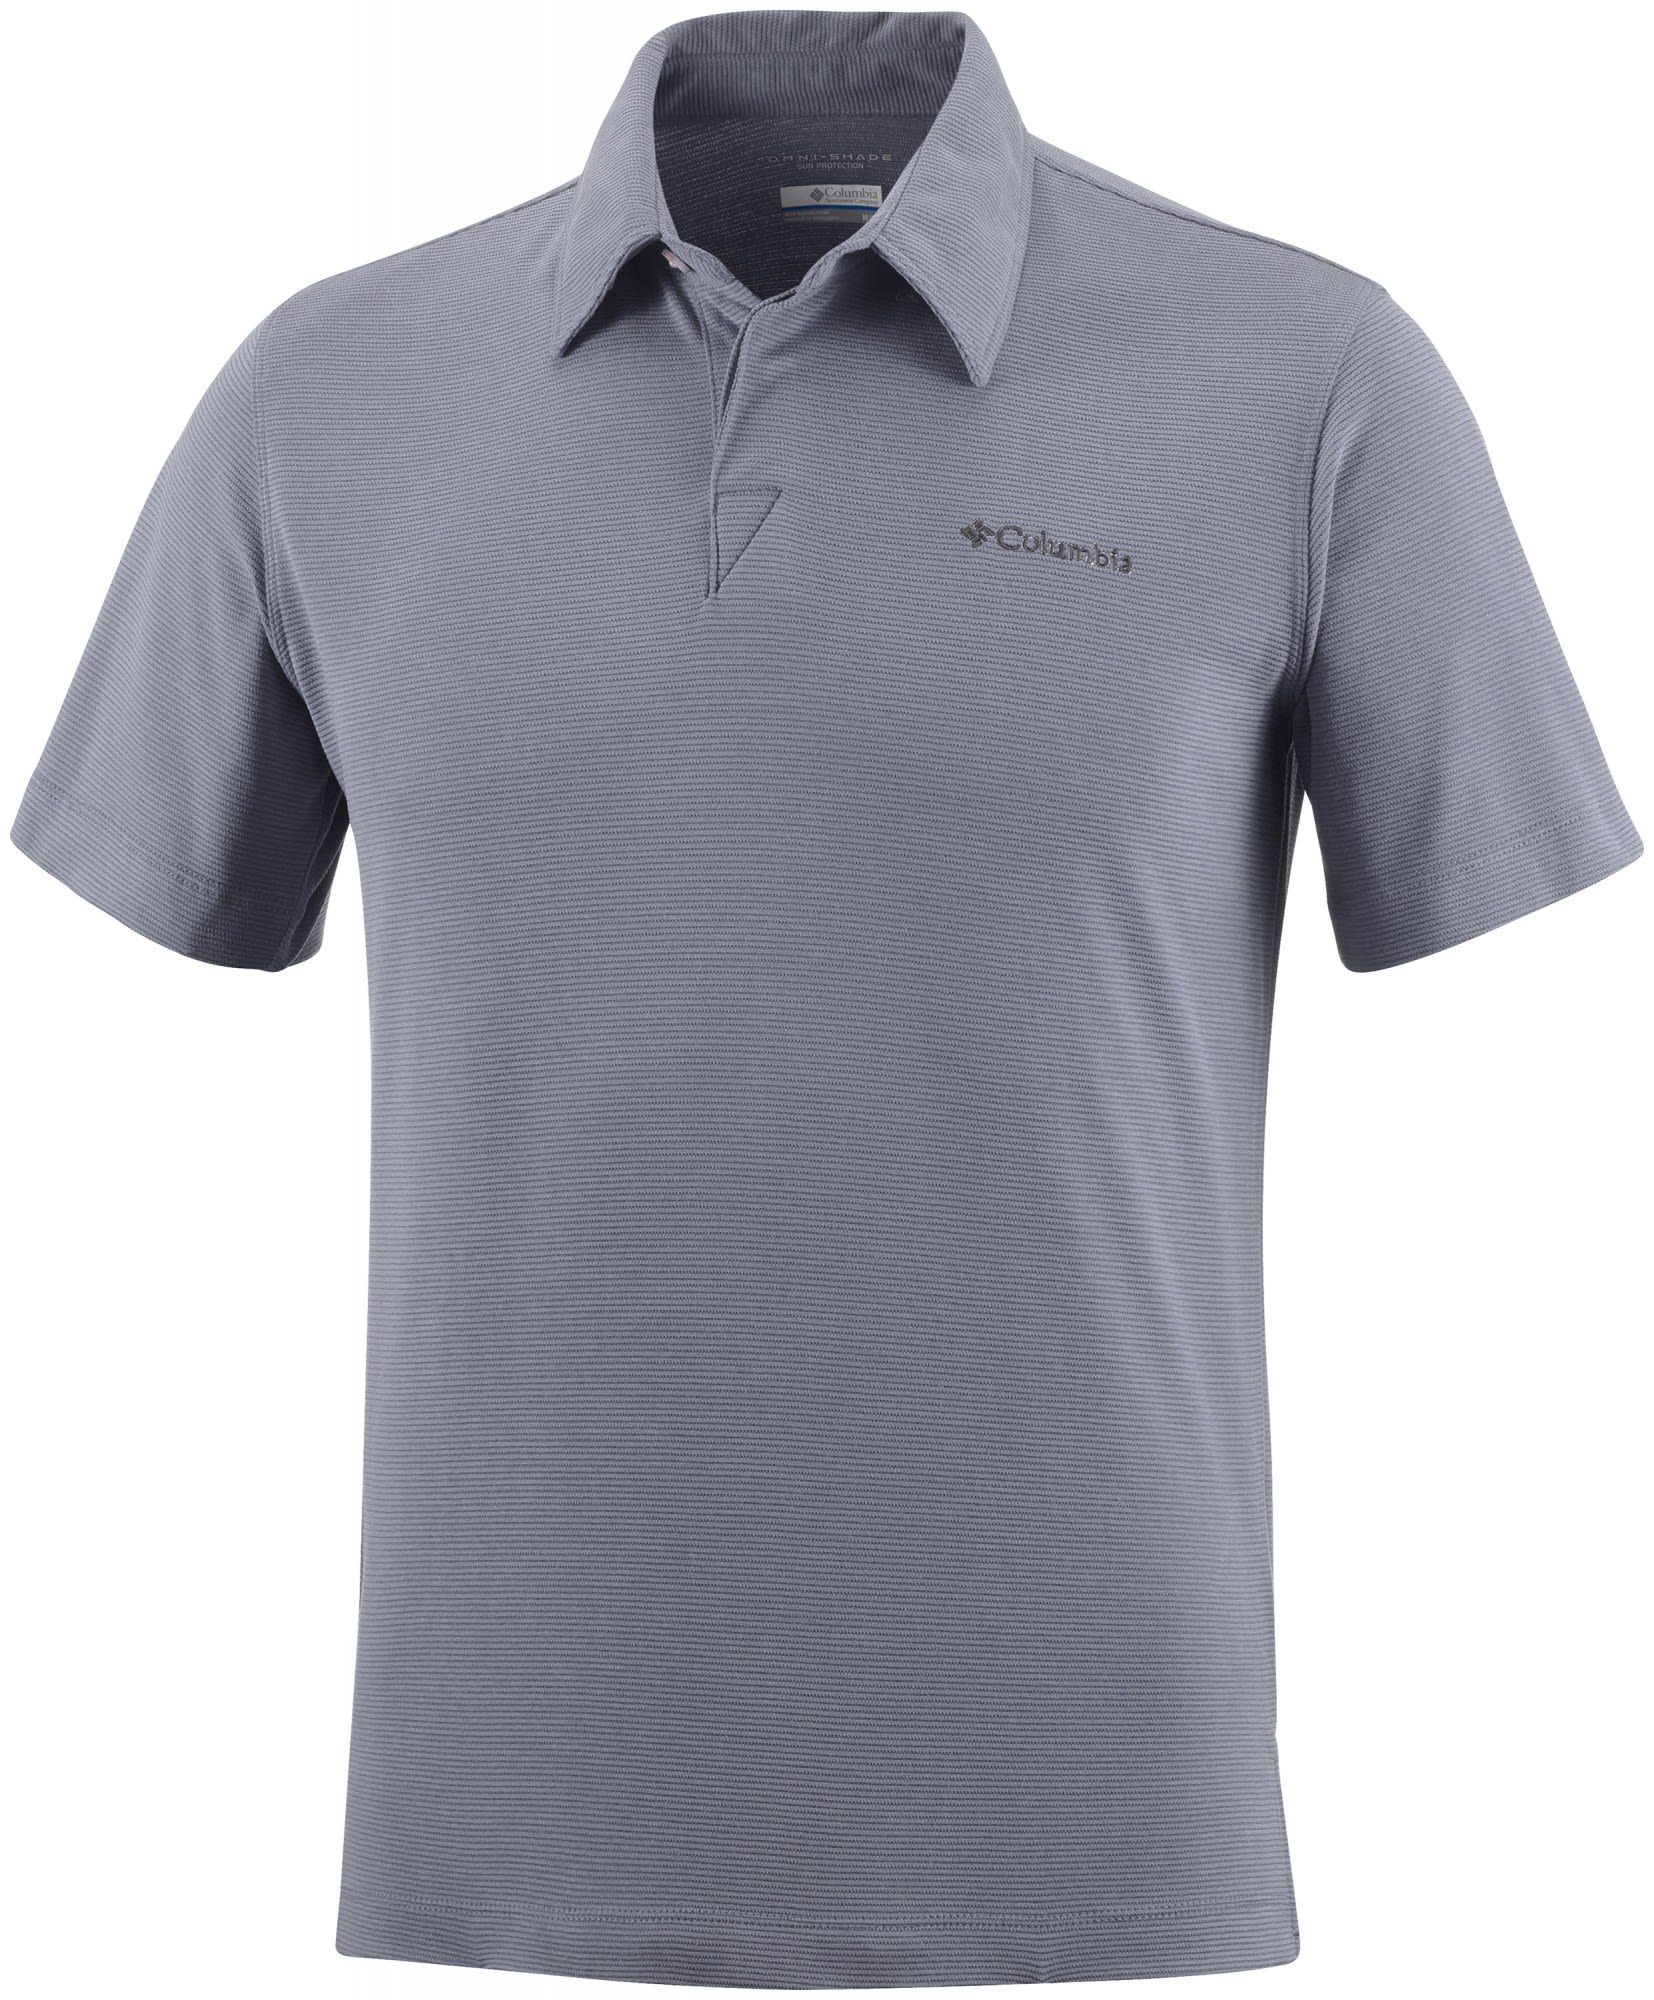 Columbia Sun Ridge Polo Grau- Male Polo Shirts- Grsse S - Farbe Grey Ash